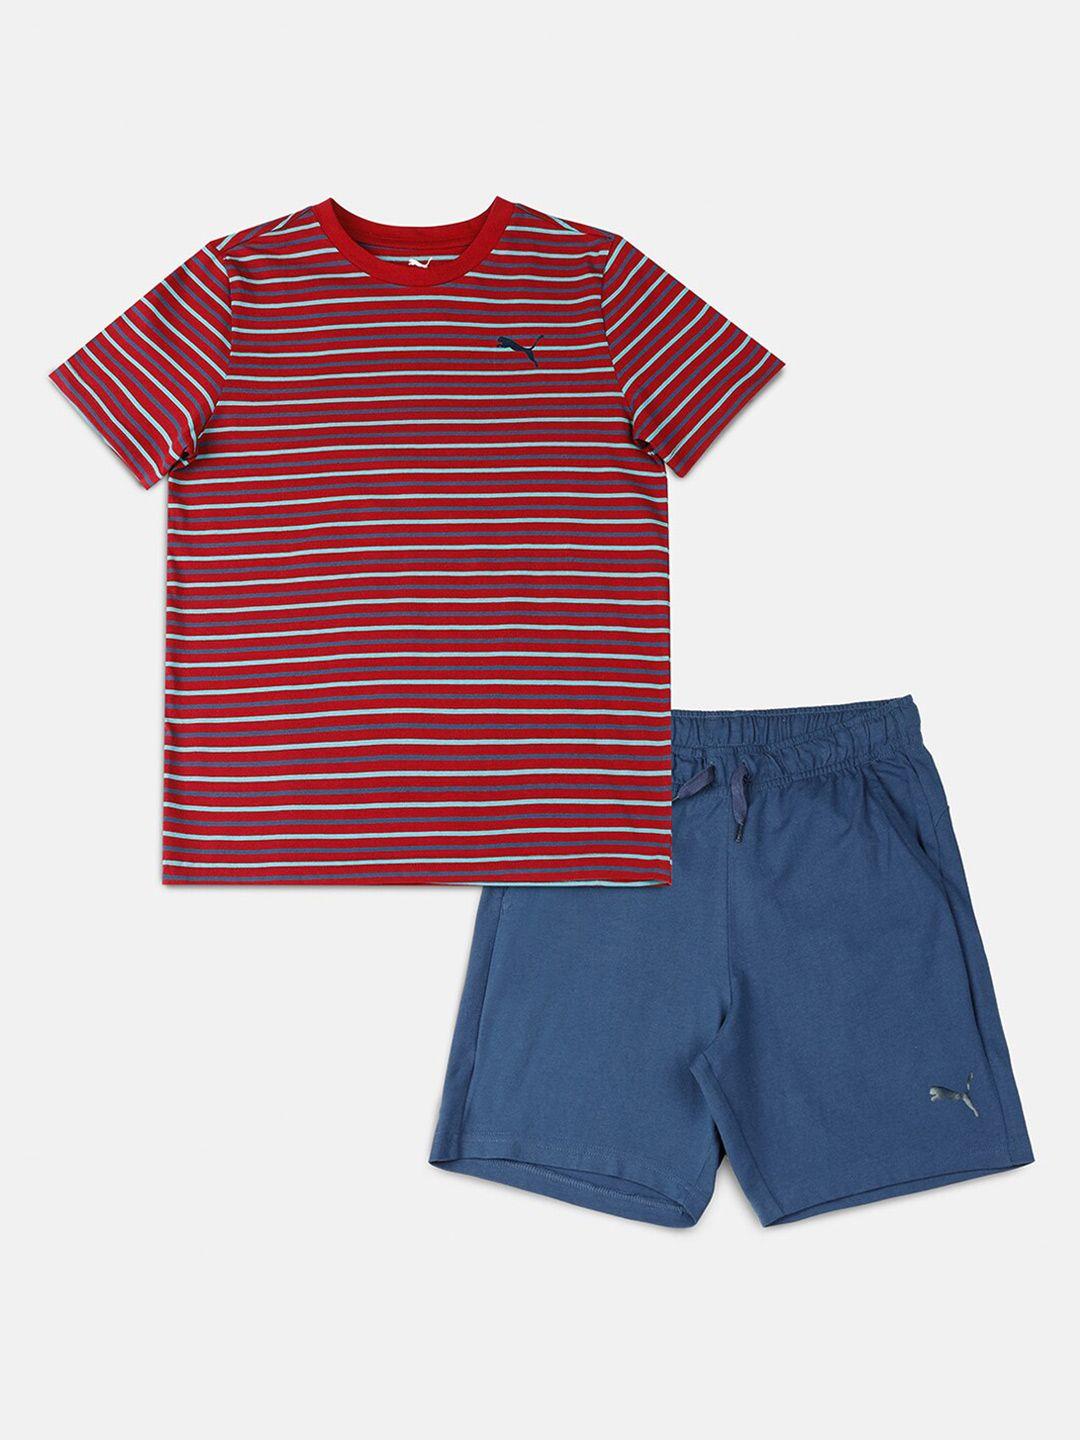 Puma Boys Red T-Shirt+Jogger Clothing Set